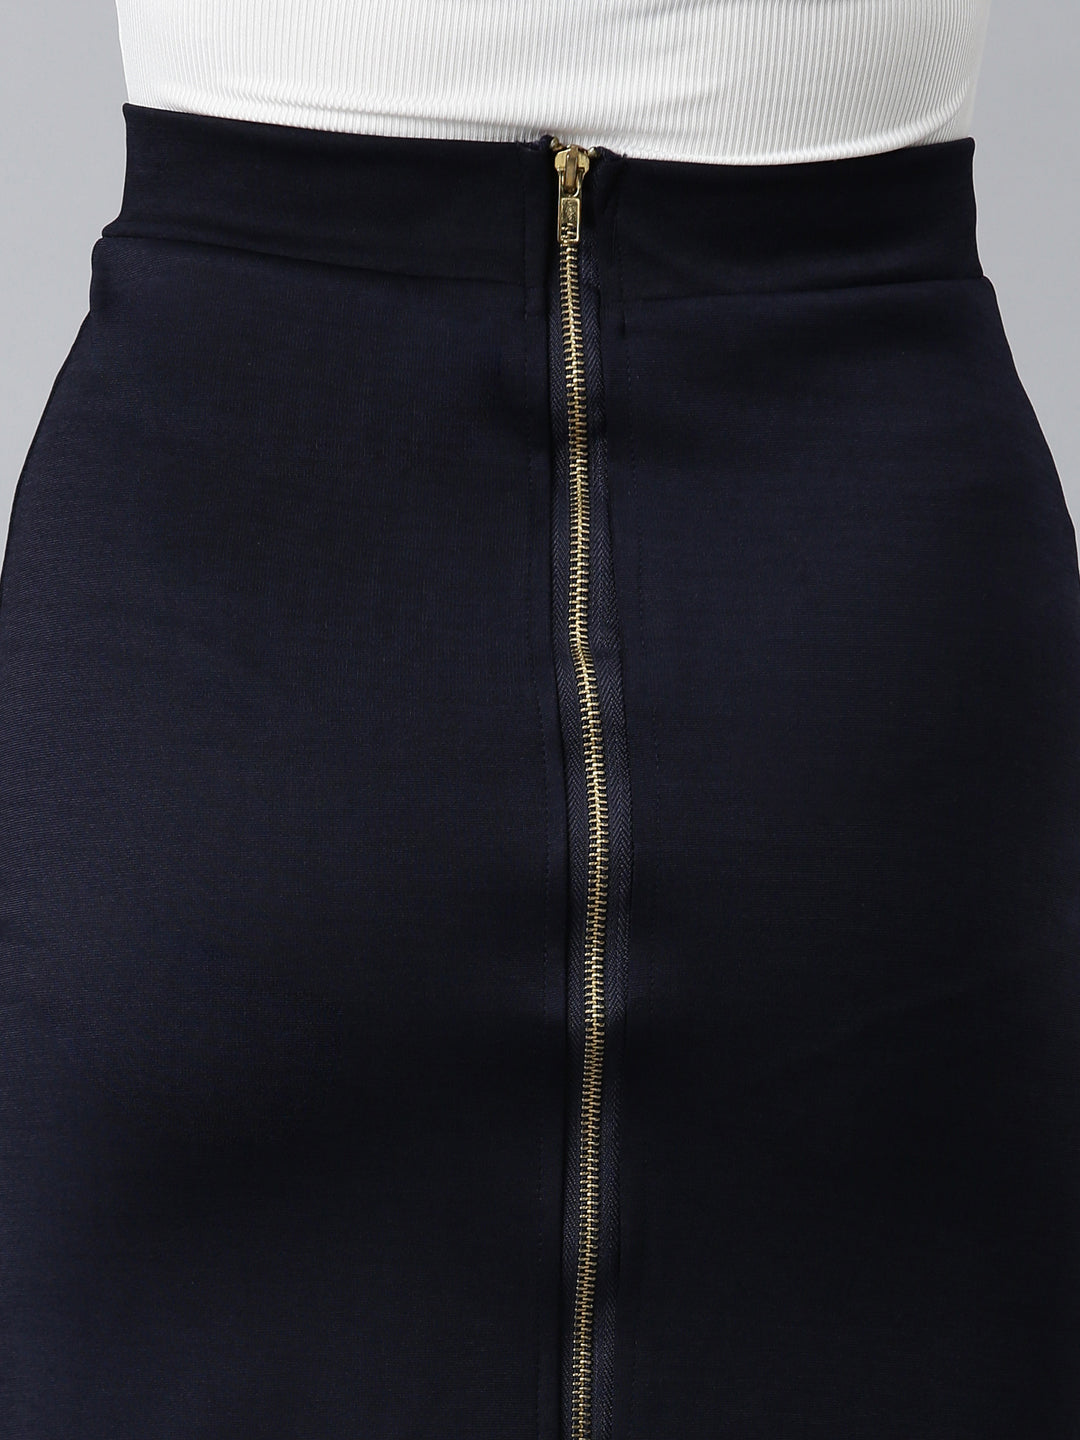 Women Navy Blue Solid Pencil Skirt